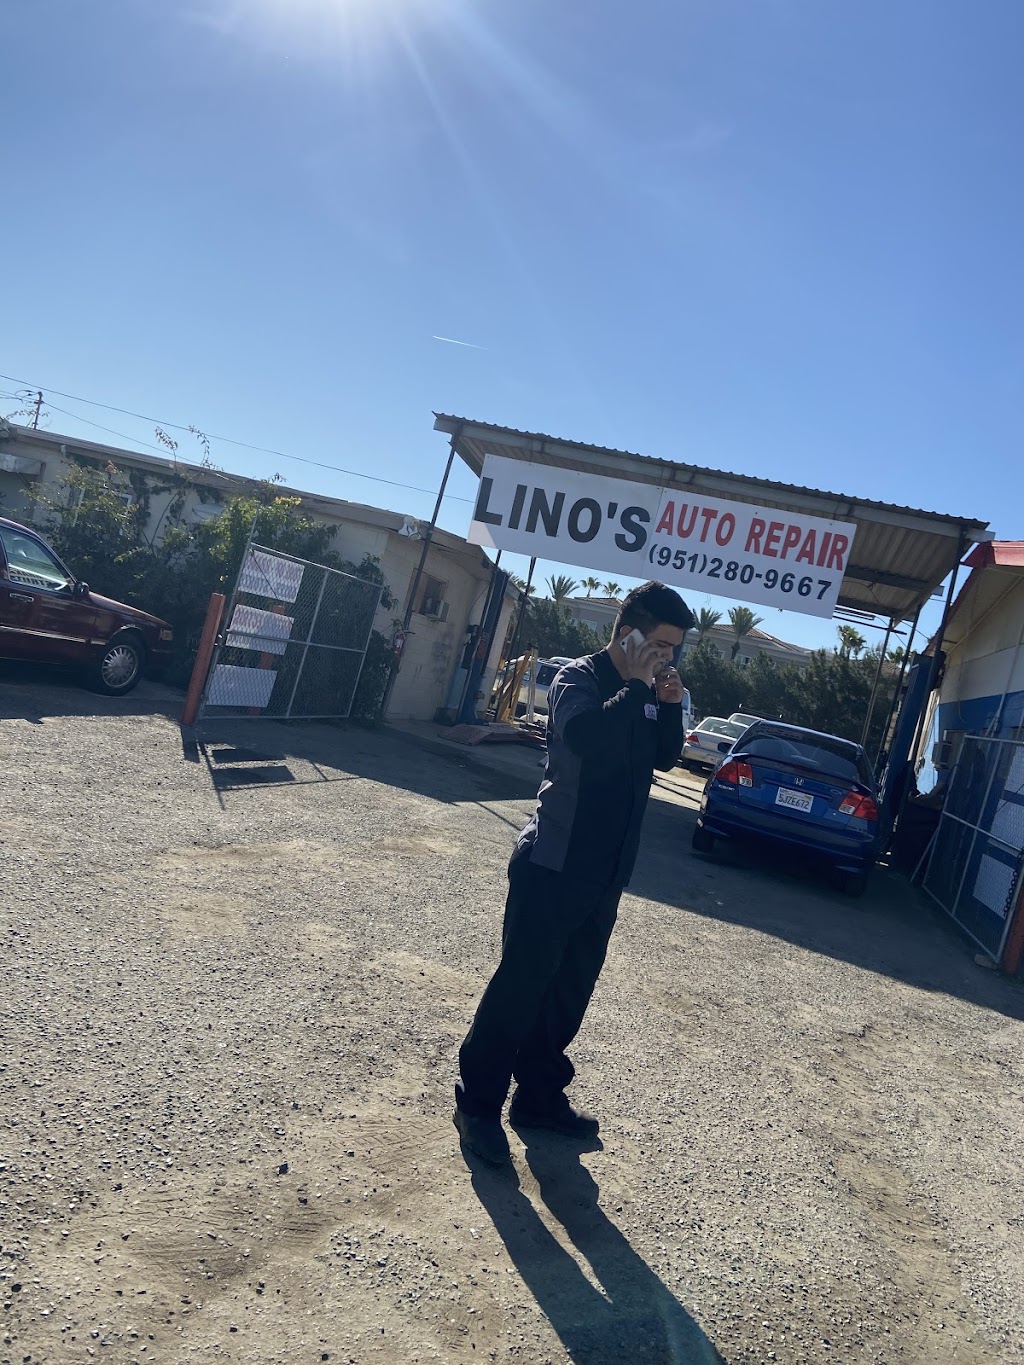 Linos Auto Repair | 1342 E 6th St unit #108, Corona, CA 92879 | Phone: (951) 280-9667